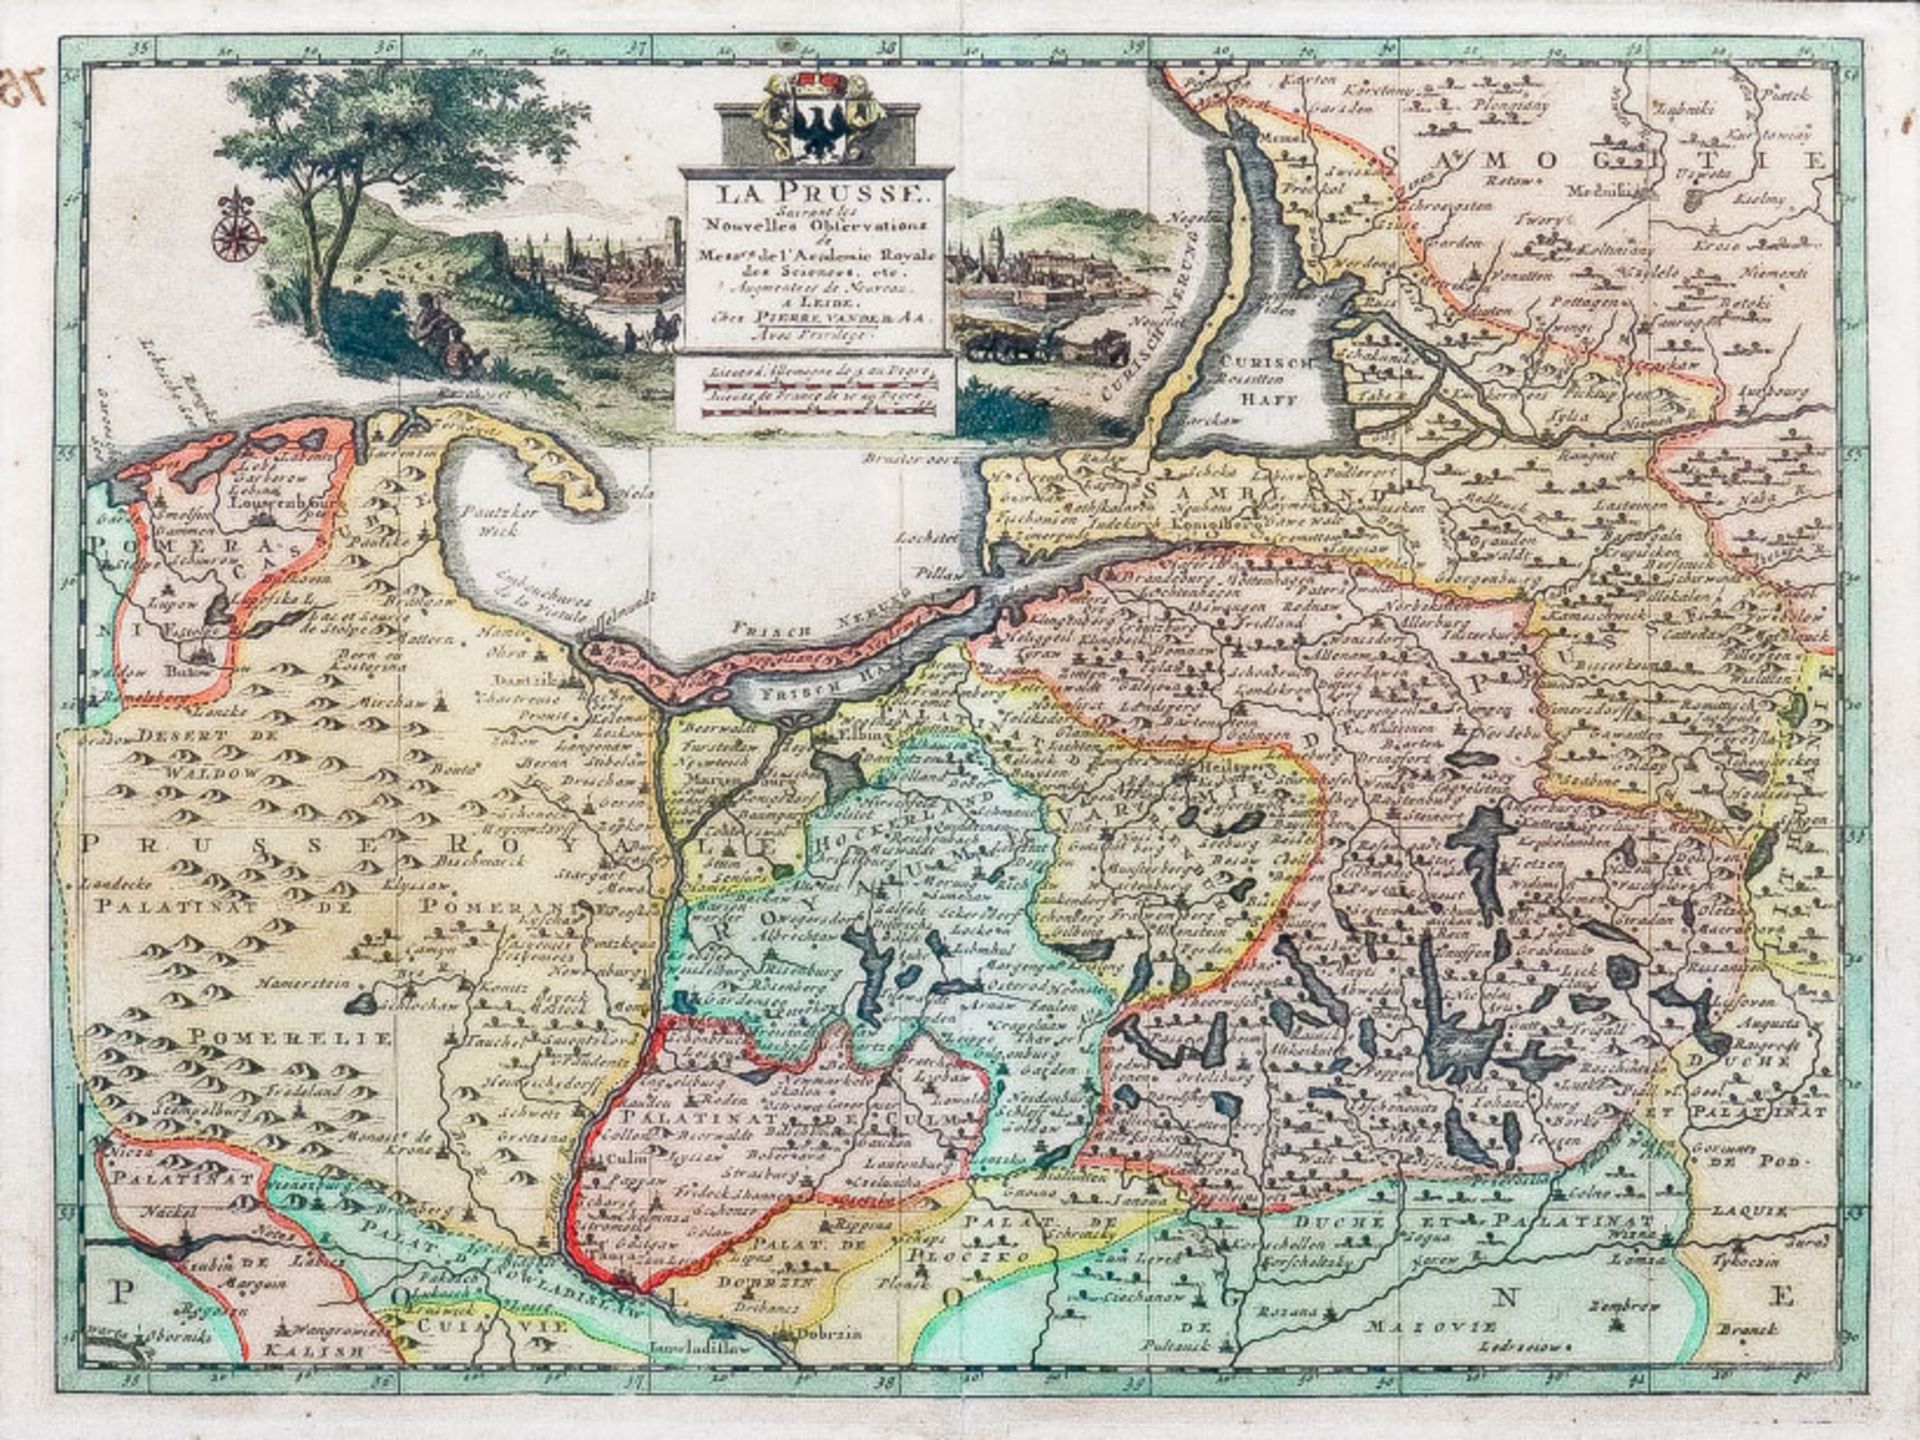 Preußen – Brandenburgum 1700/20La Prusse Suirant des Nouvelles Observations ... Kol Kupferstich